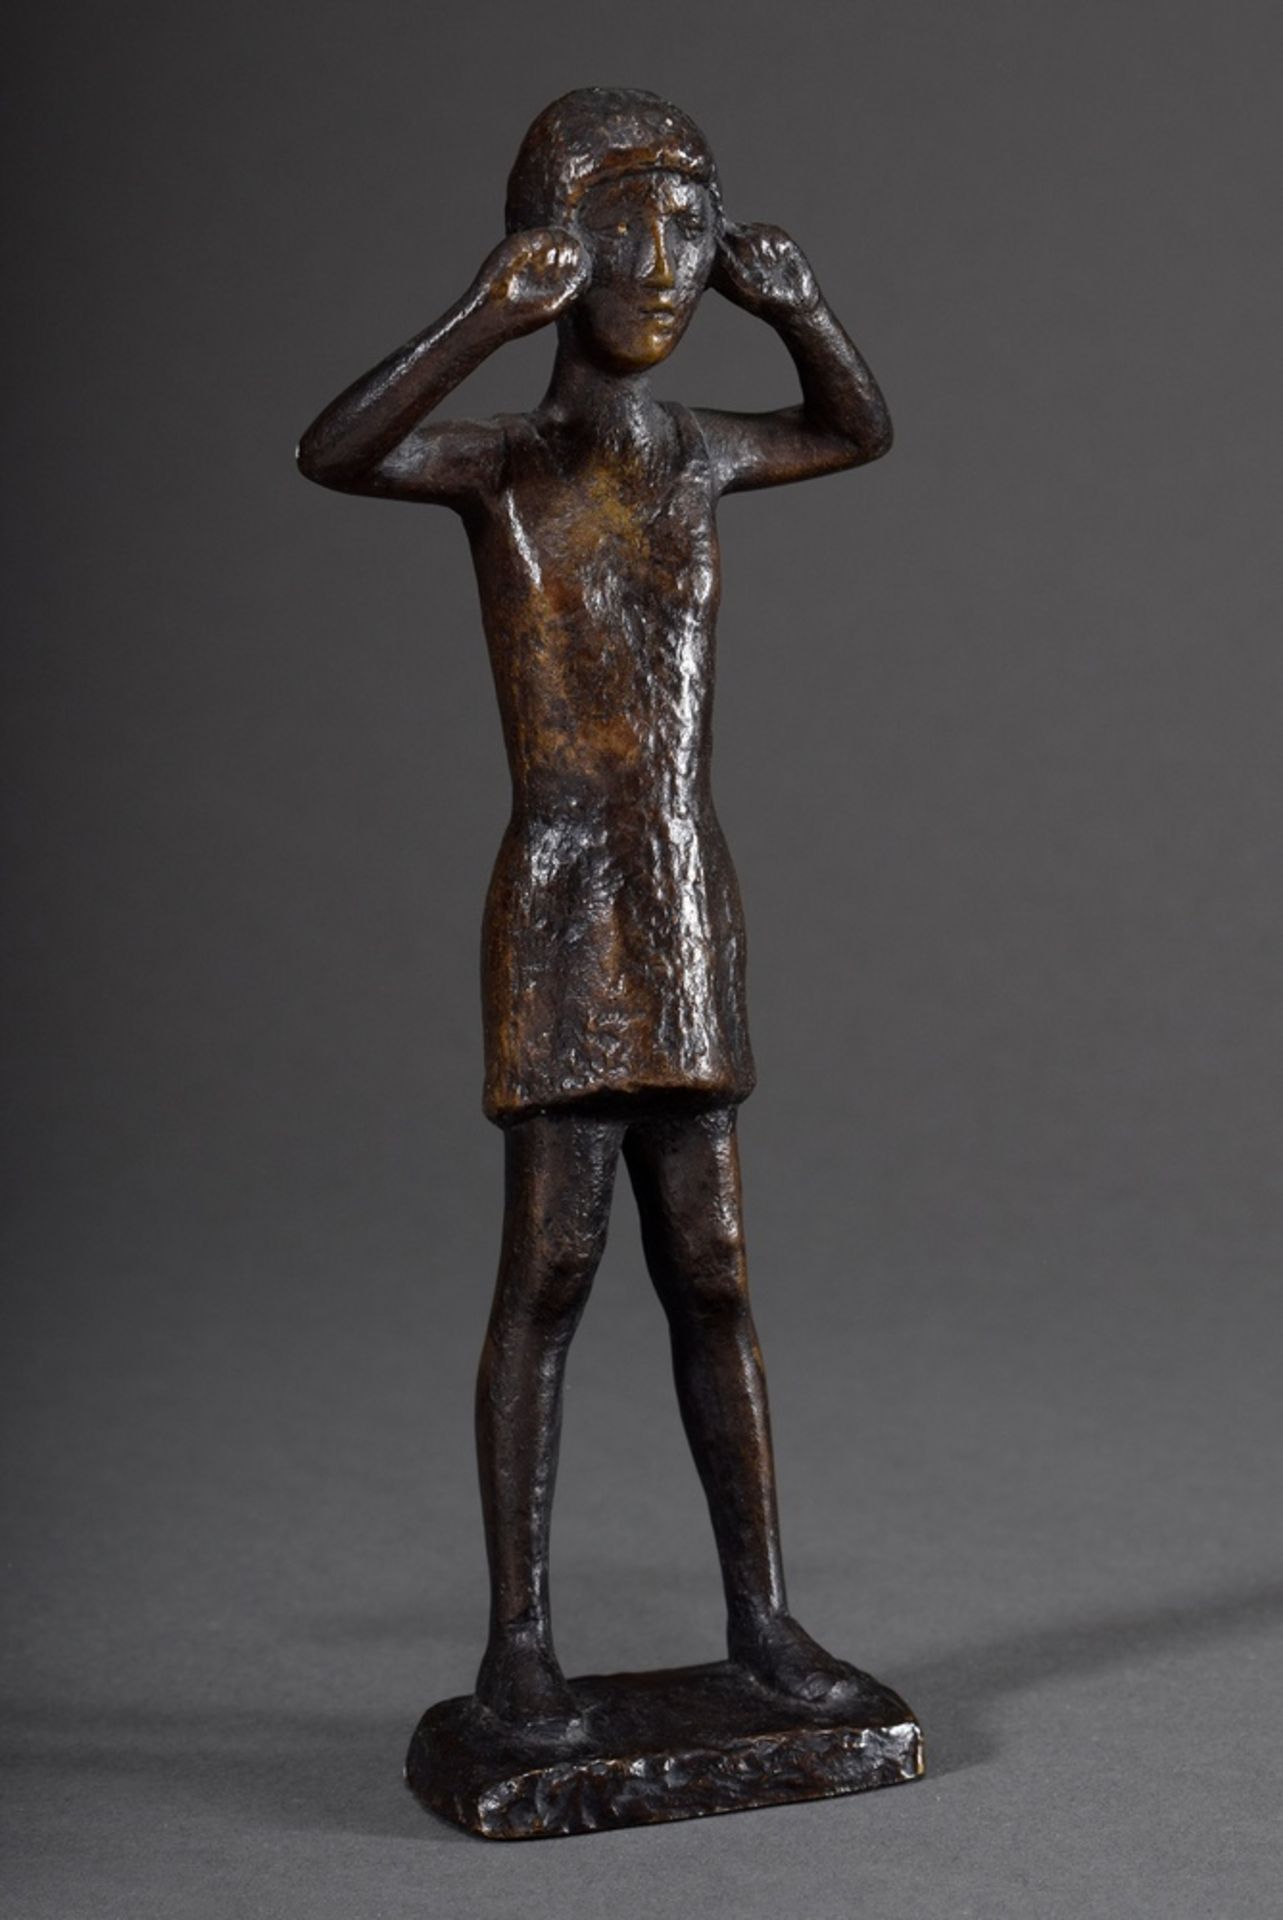 Meyer, Ehler (1923-2002) "Jasmine", bronze, 97/200, cast Barth Elmenhorst, art award 1979 of the fo